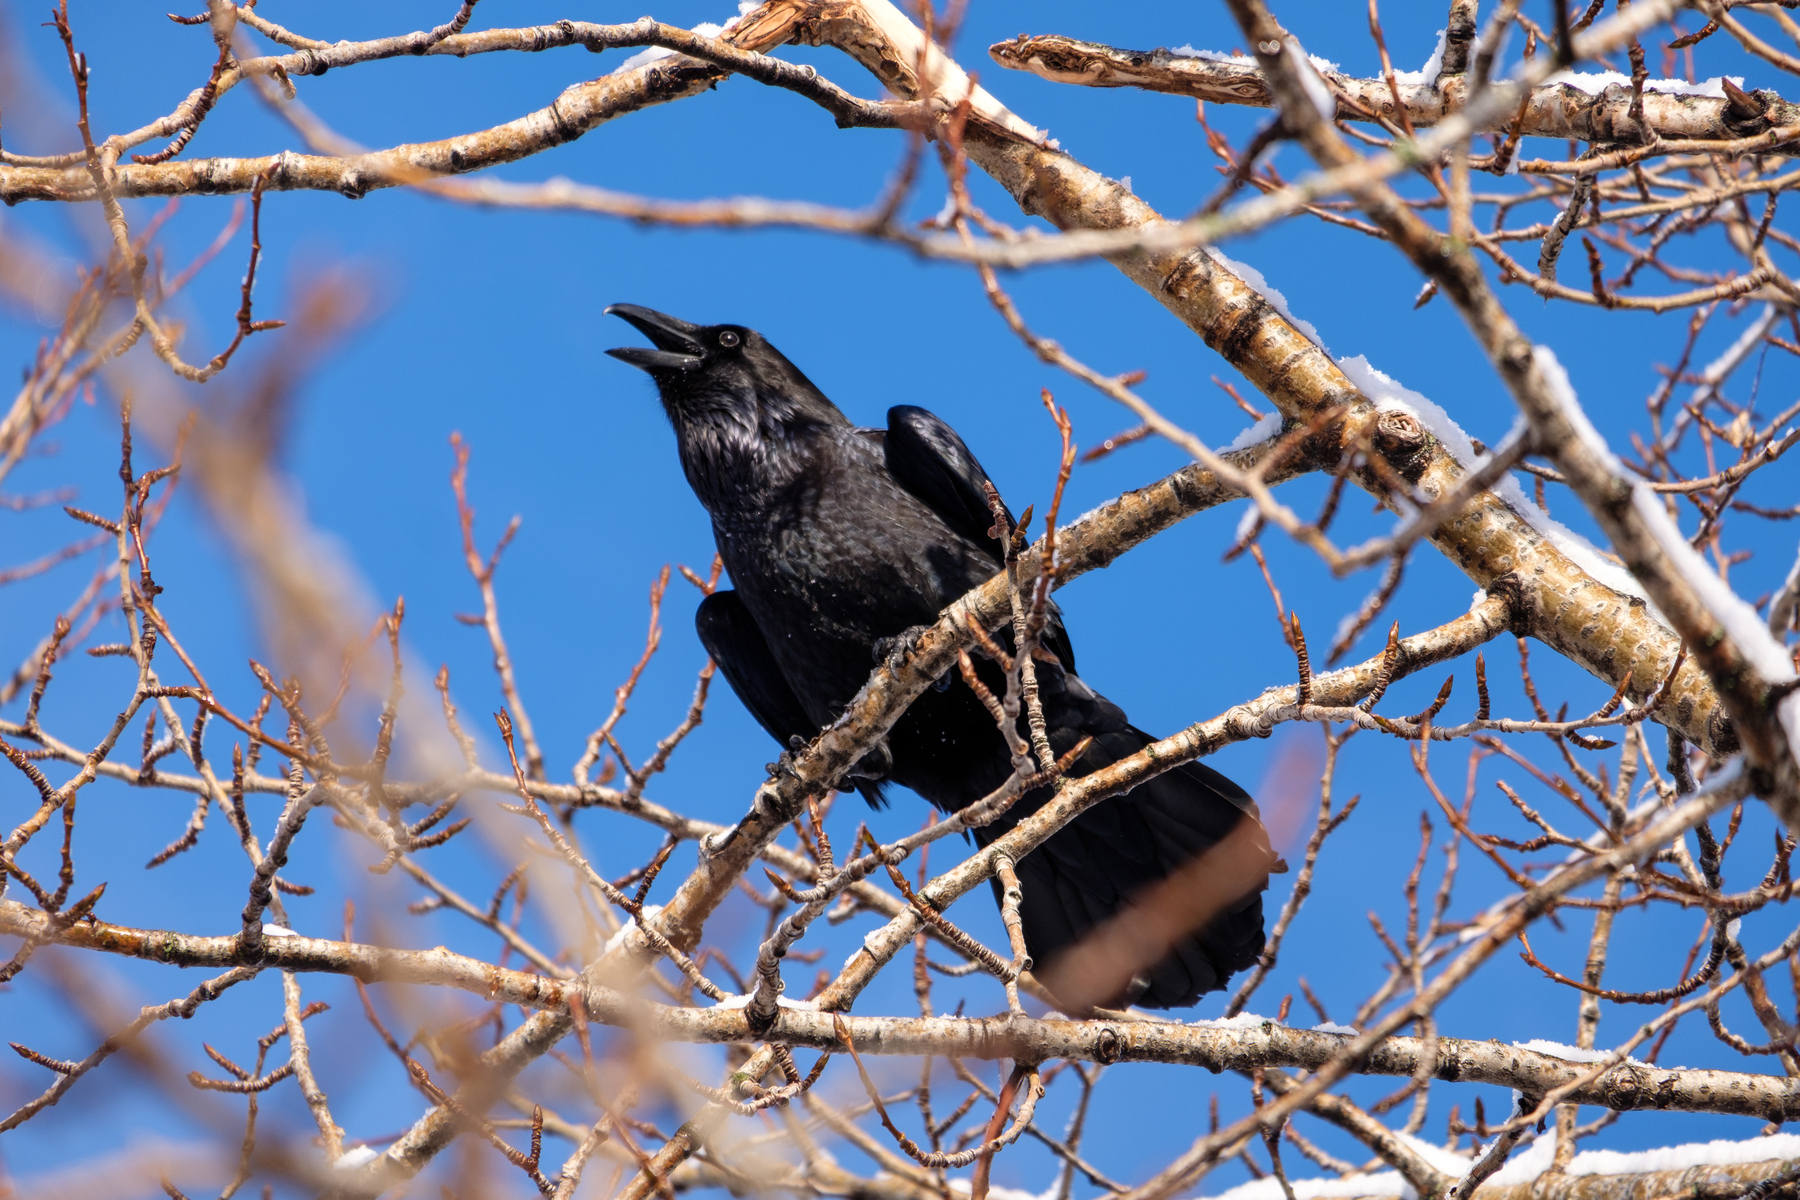 Finally, a raven sitting still long enough for a photo